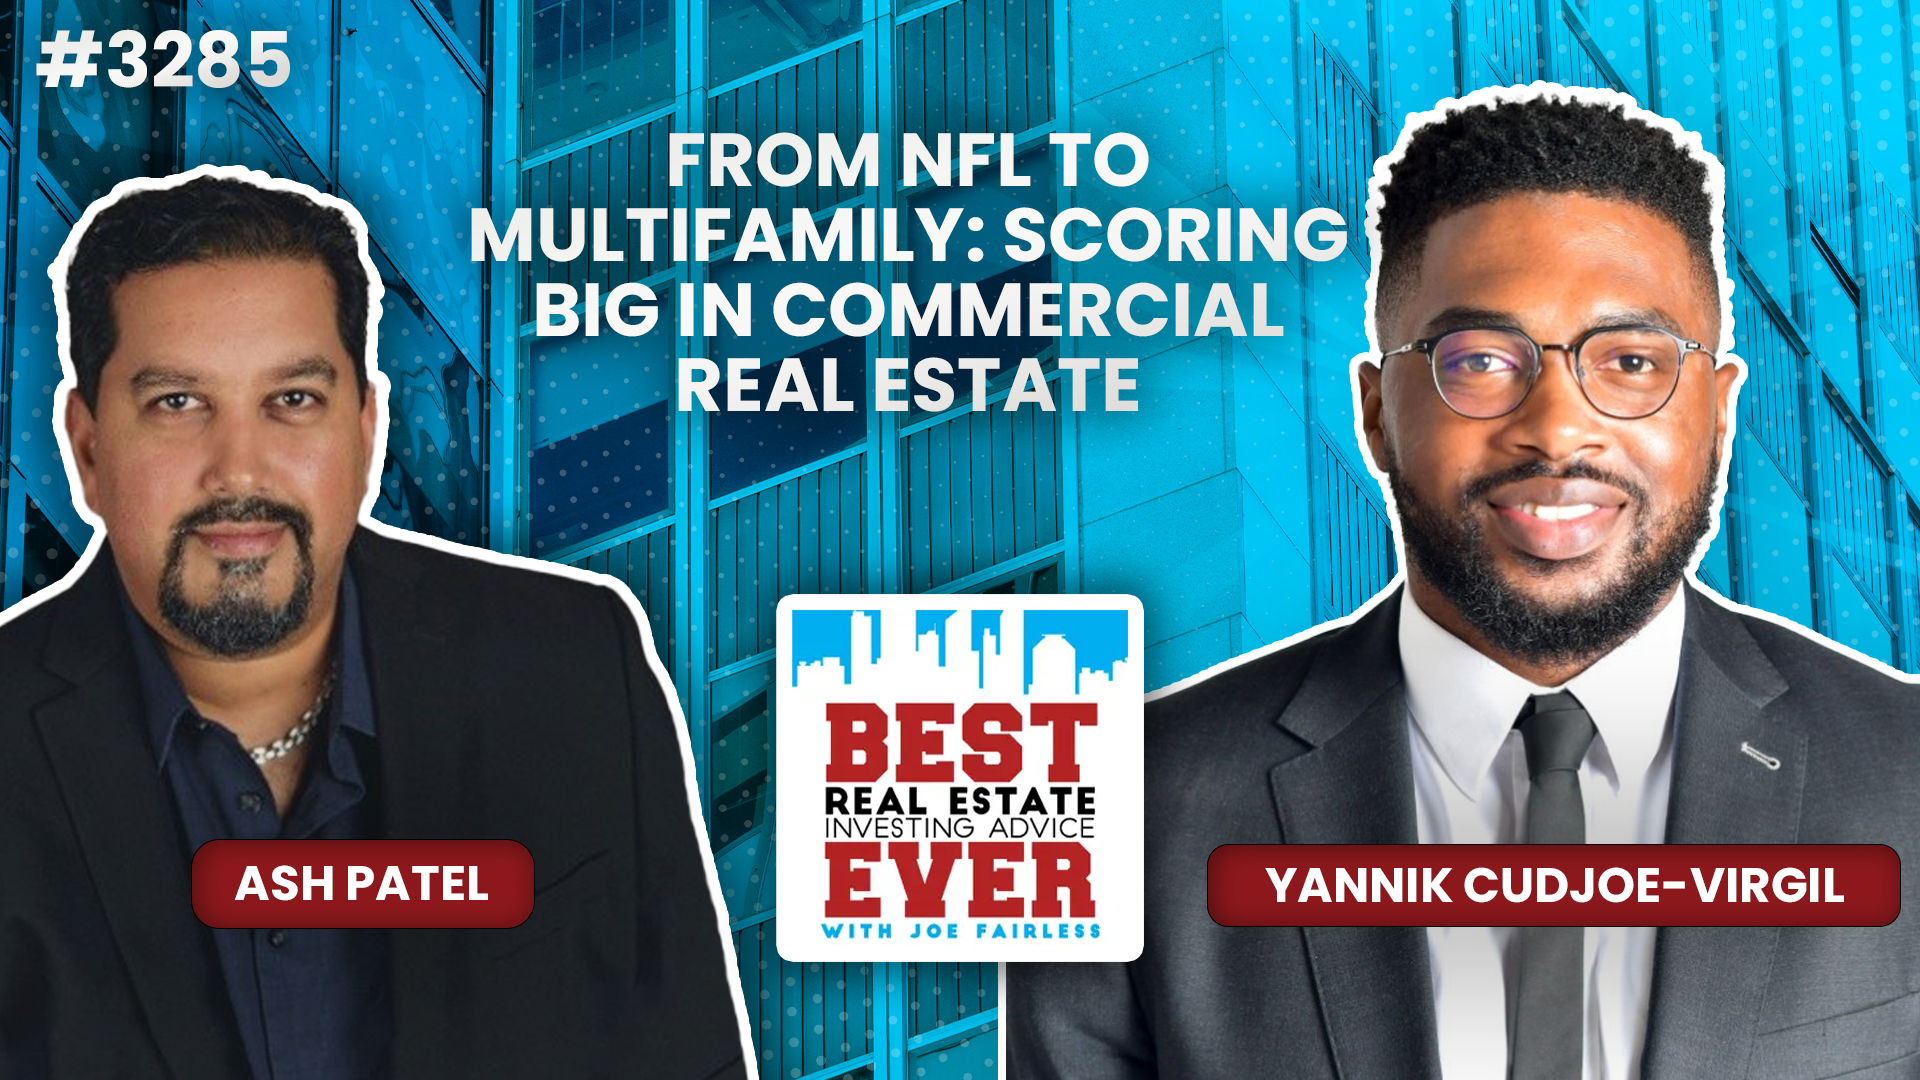 JF3285: Yannik Cudjoe-Virgil - From NFL to Multifamily: Scoring Big in Commercial Real Estate